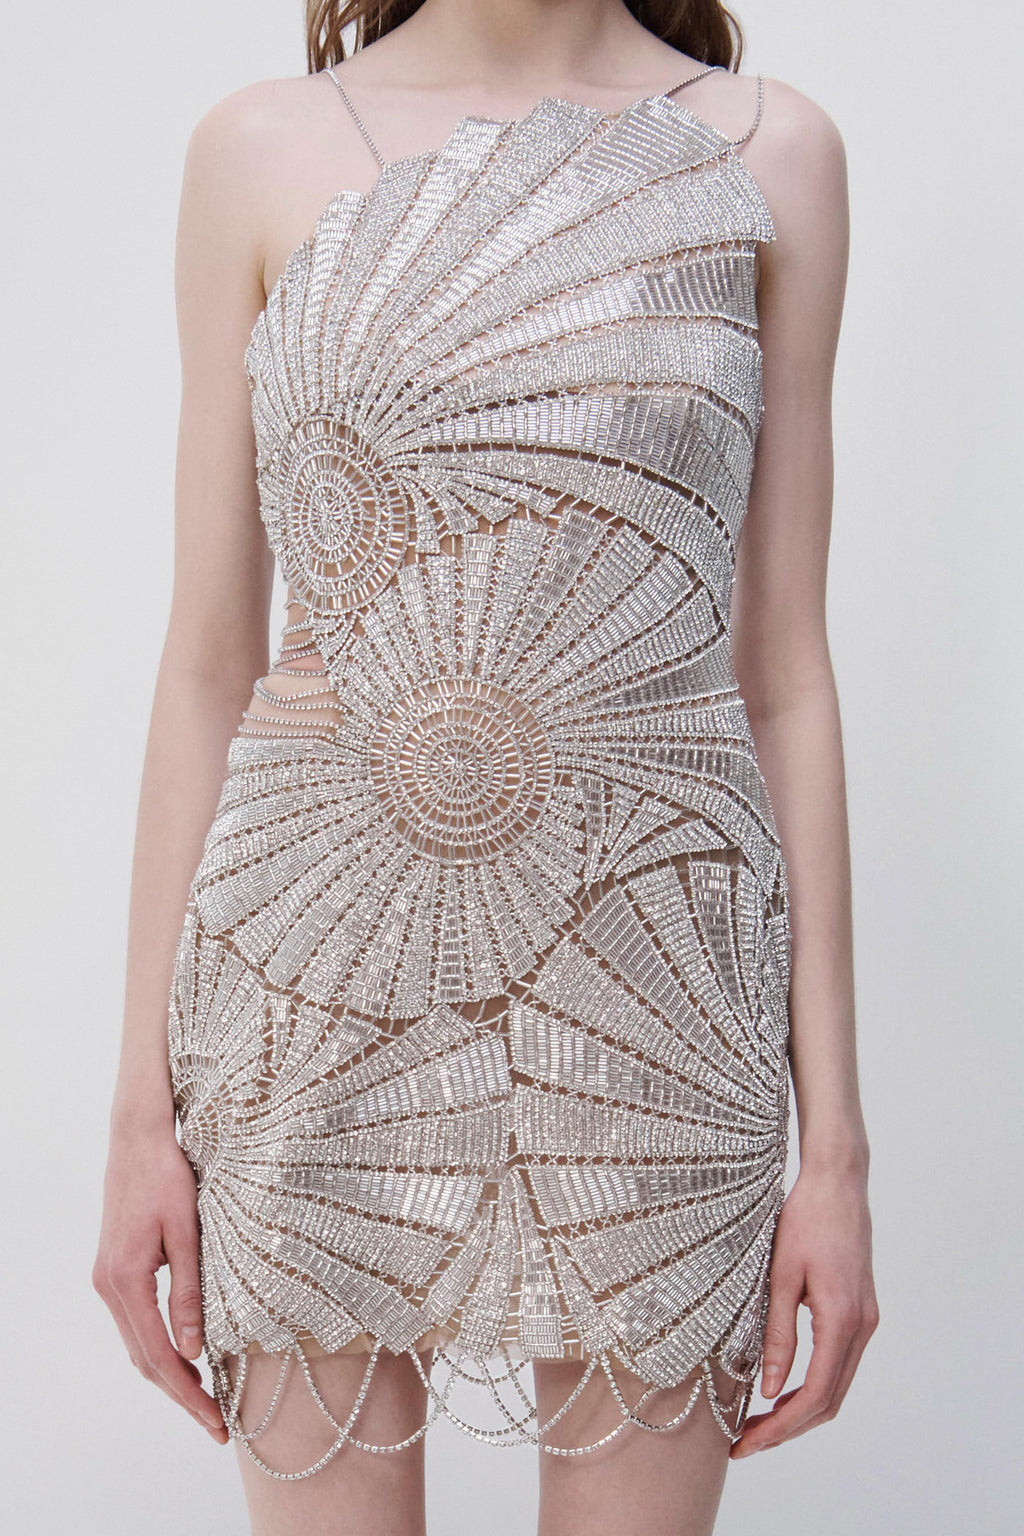 Penelope Crystal Shell Dress